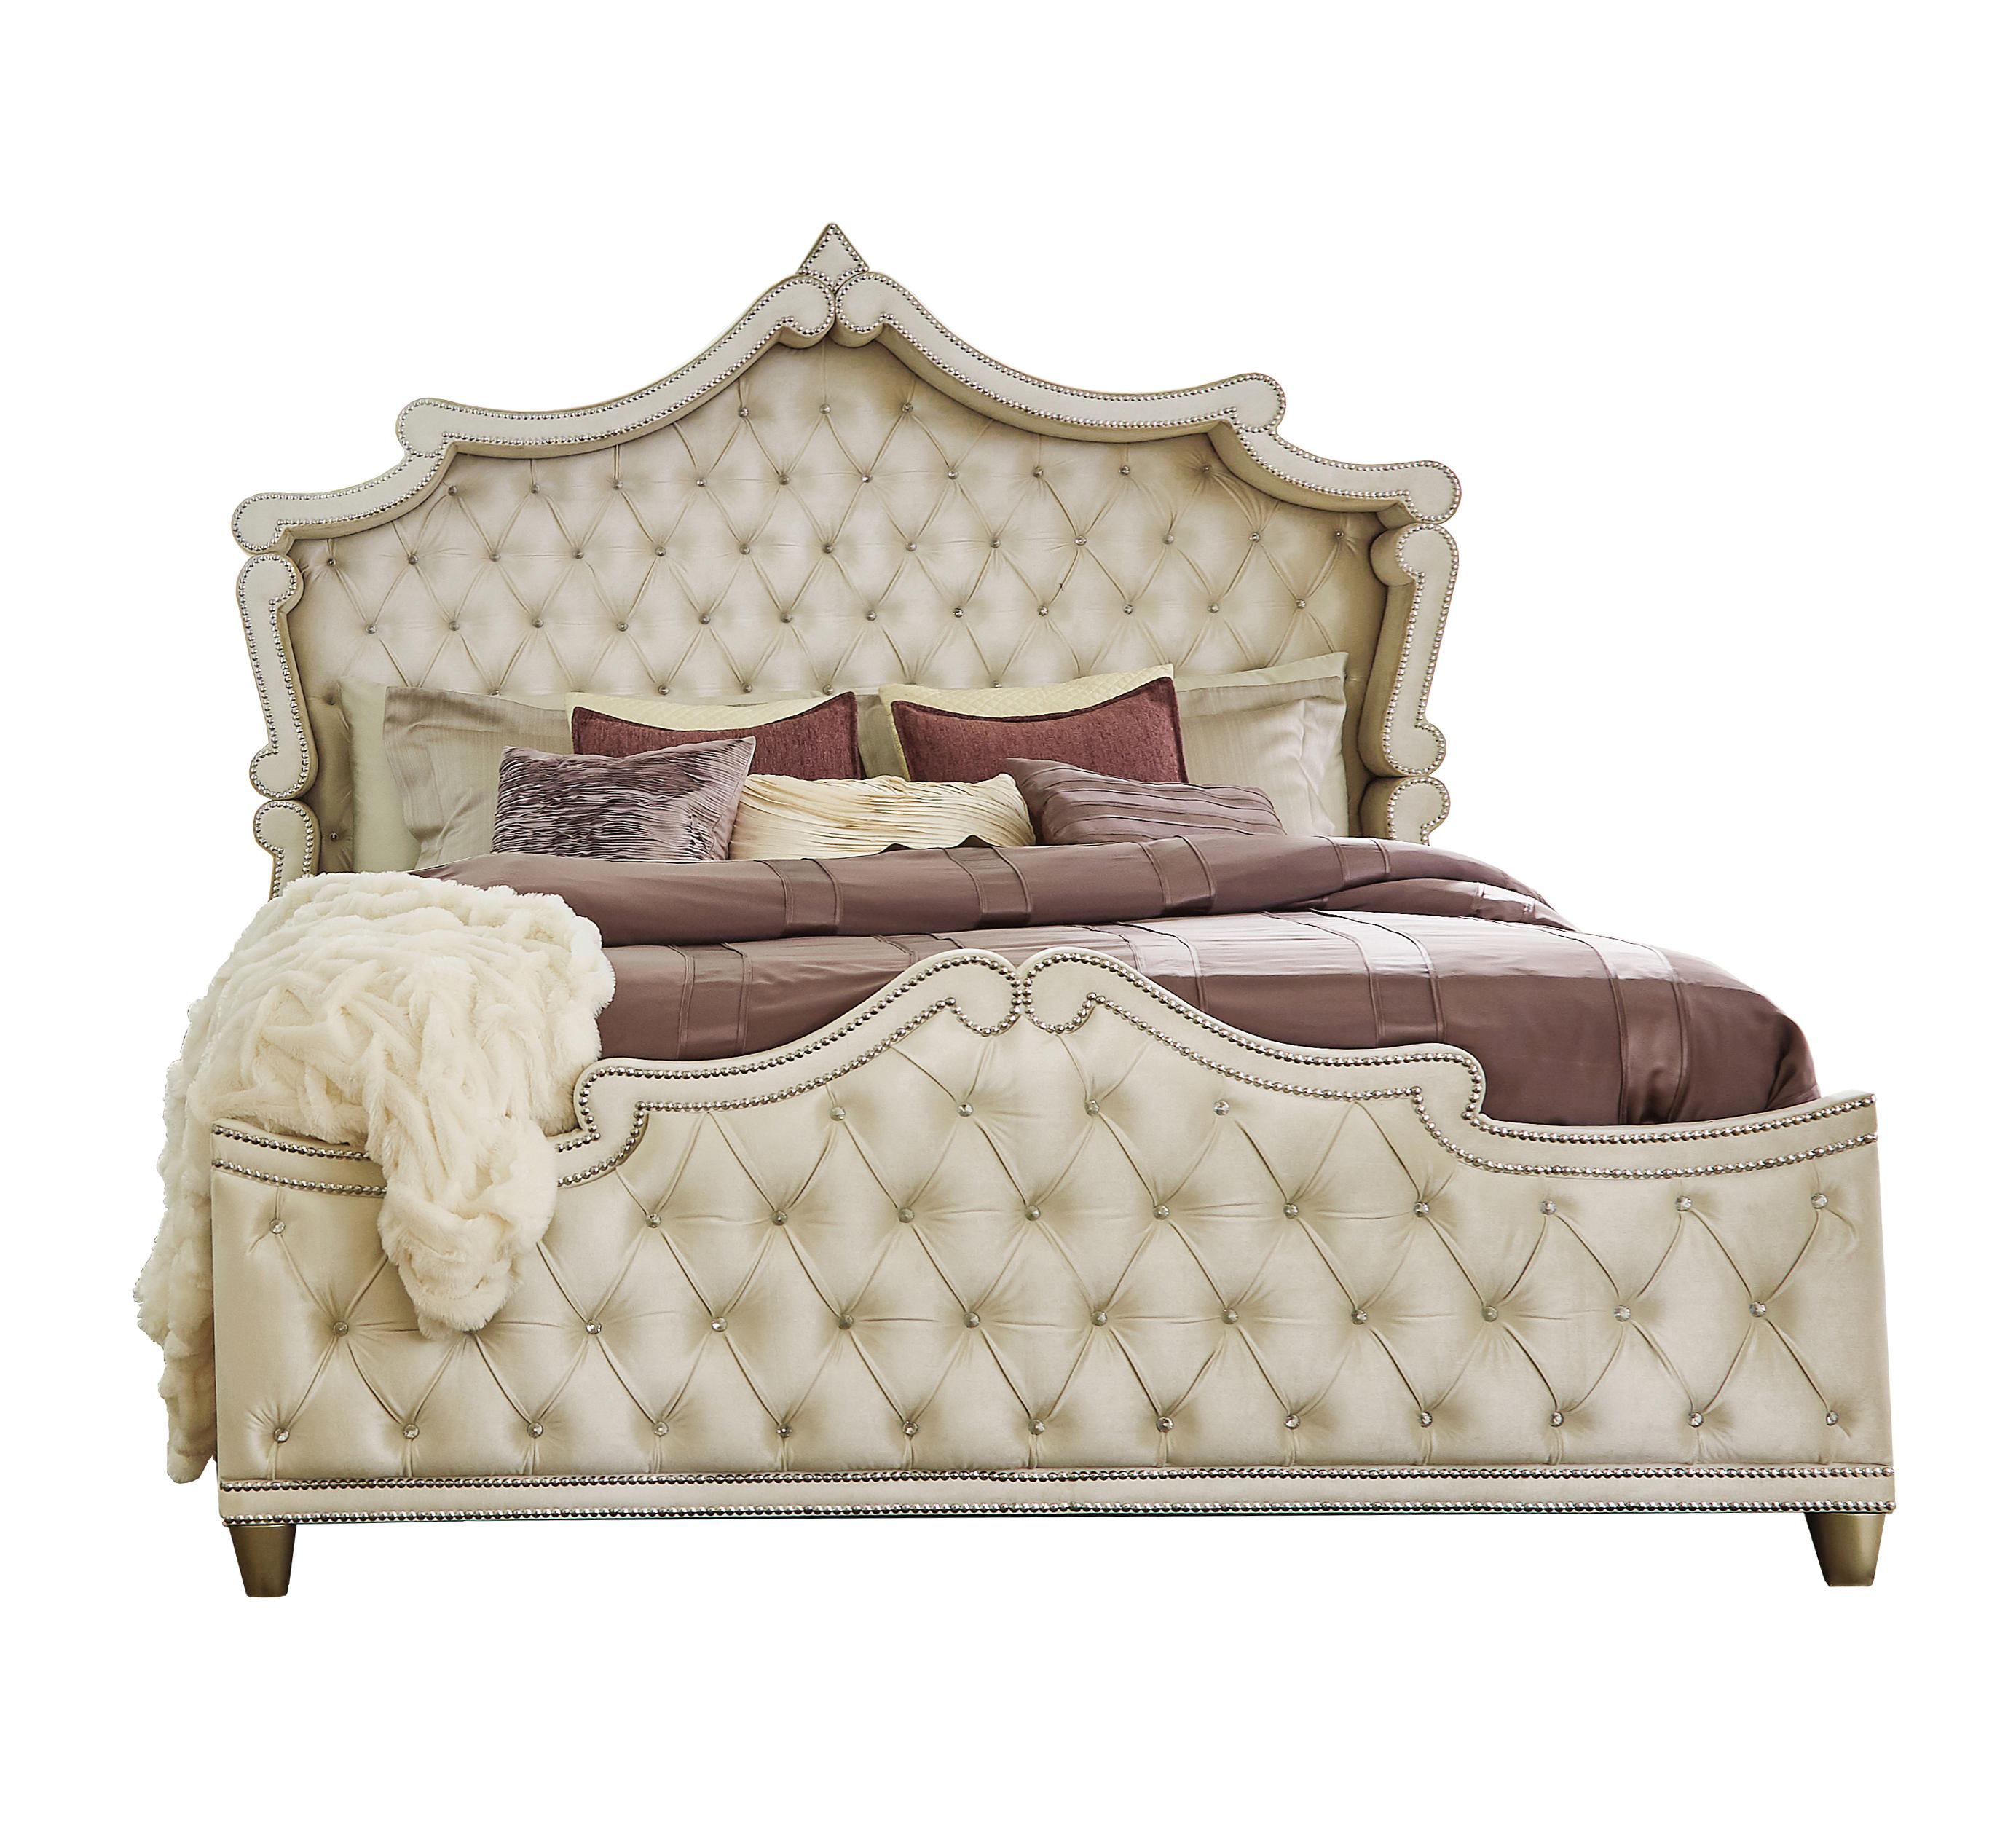 Traditional Bed 223521Q Antonella 223521Q in Camel, Ivory Velvet